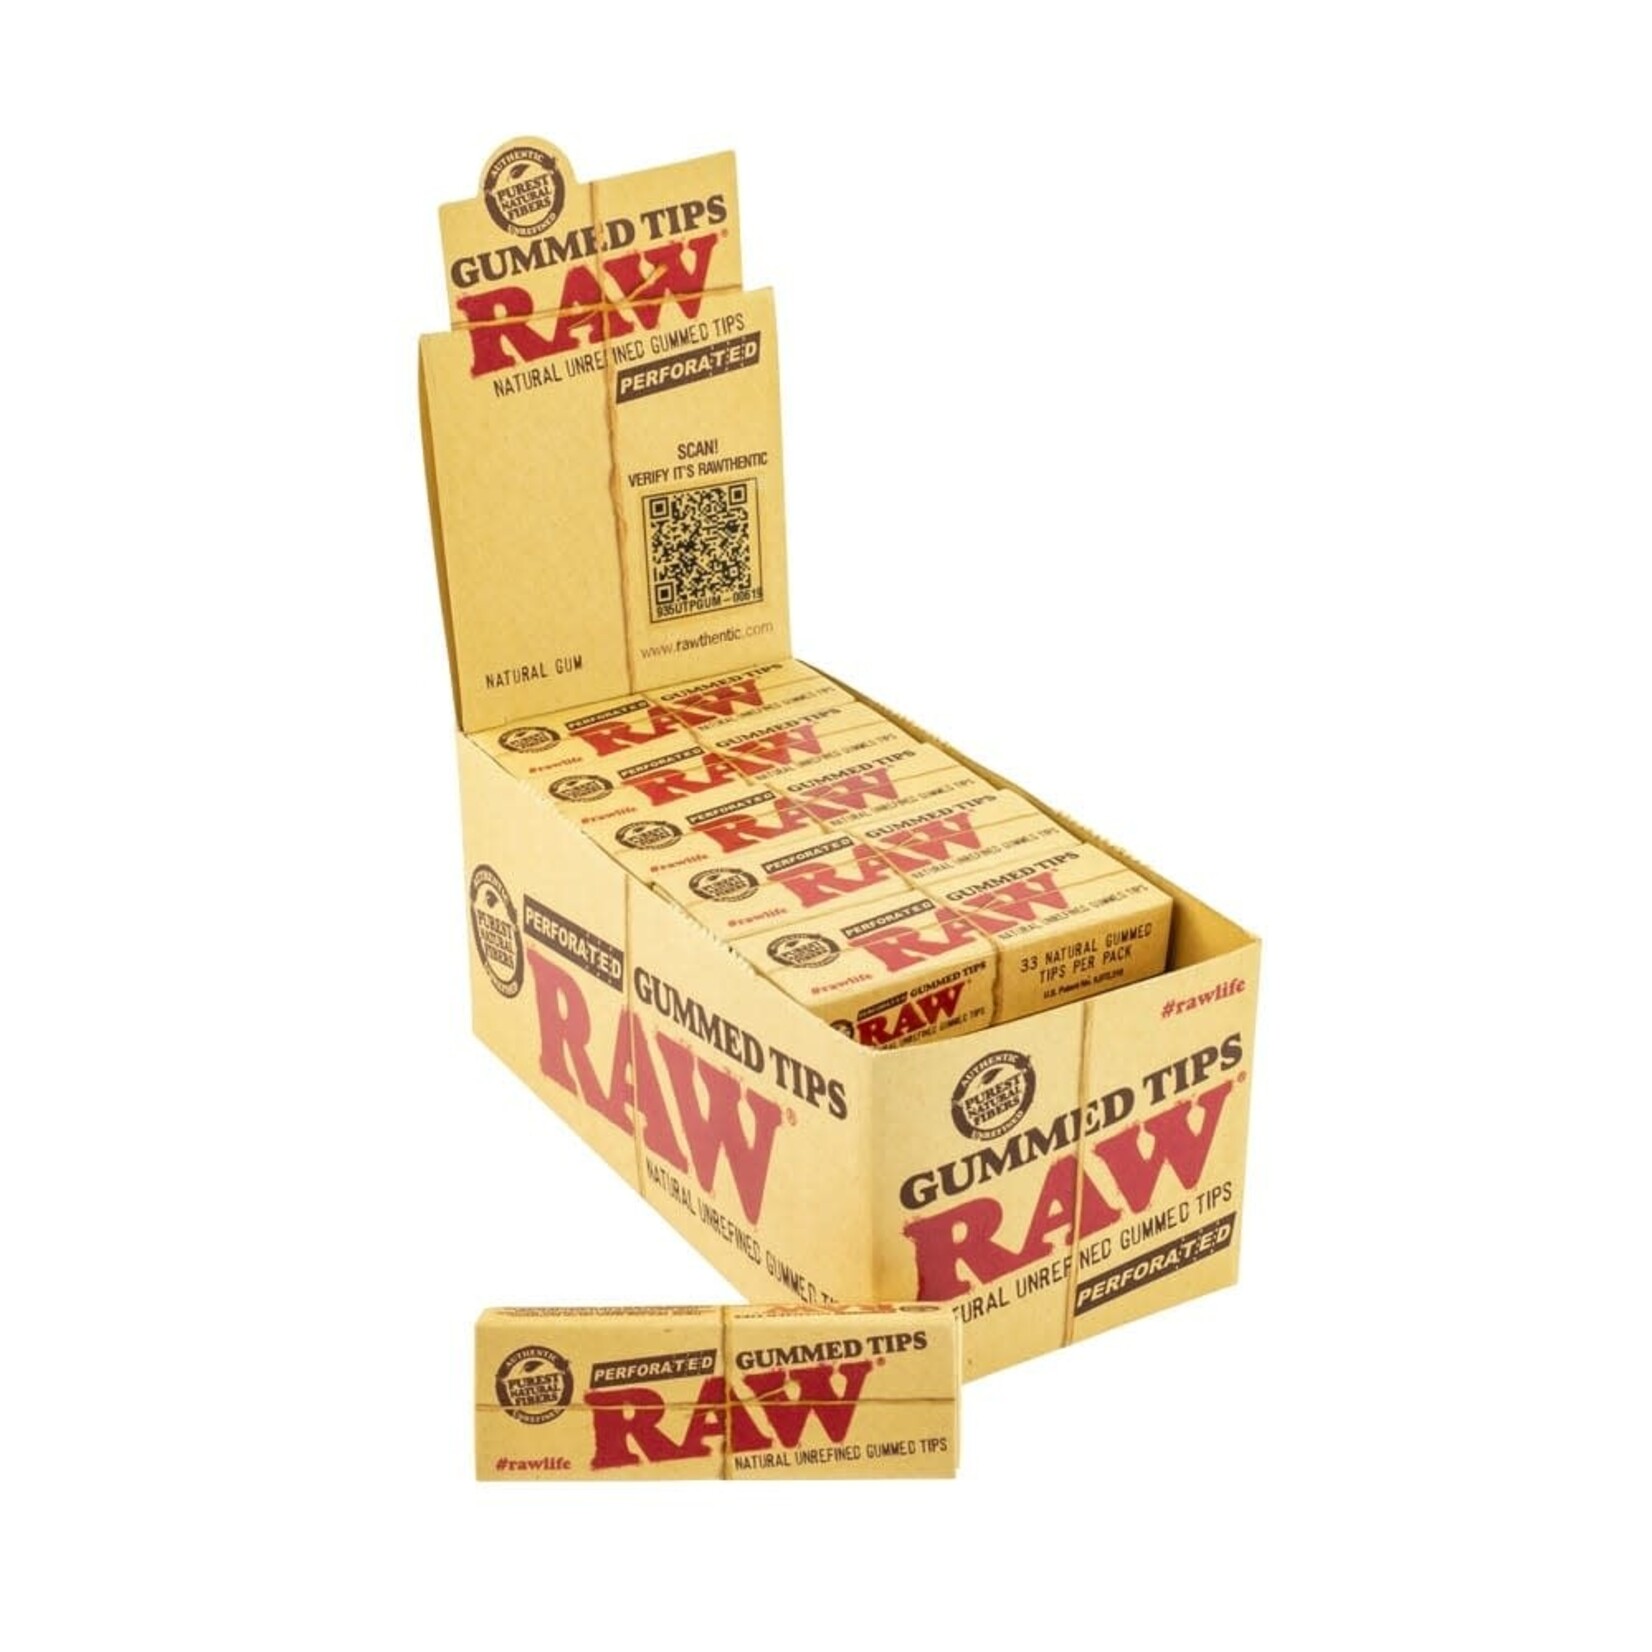 Raw® RAW® - Tips